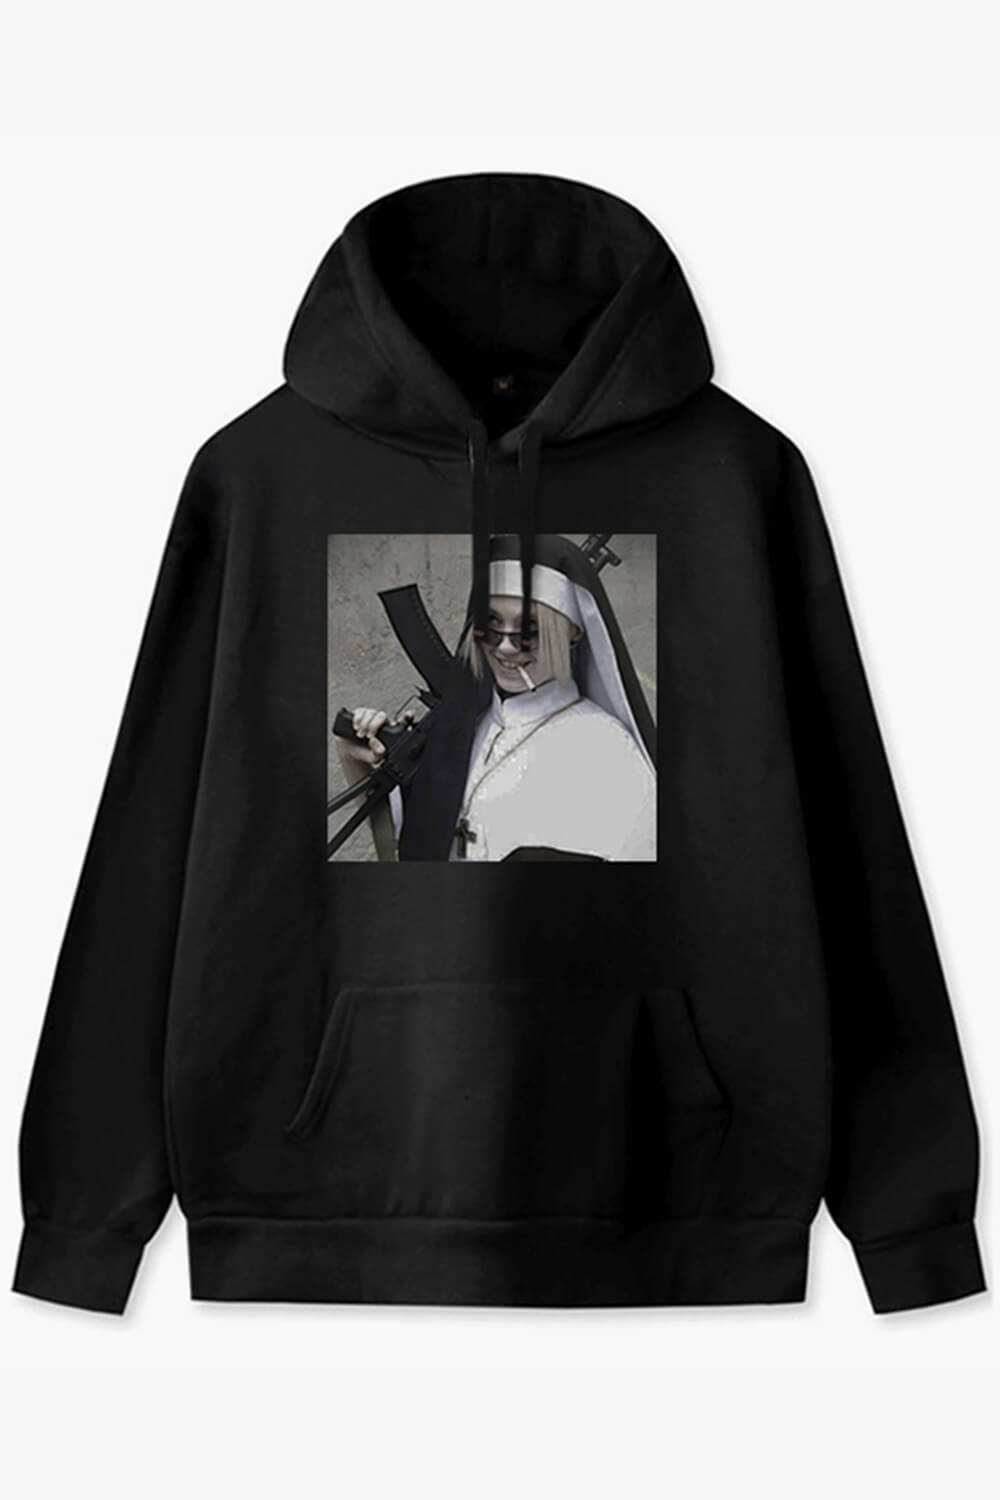 Bad Girl Aesthetic Hoodie Nun with AK 47 Rifle